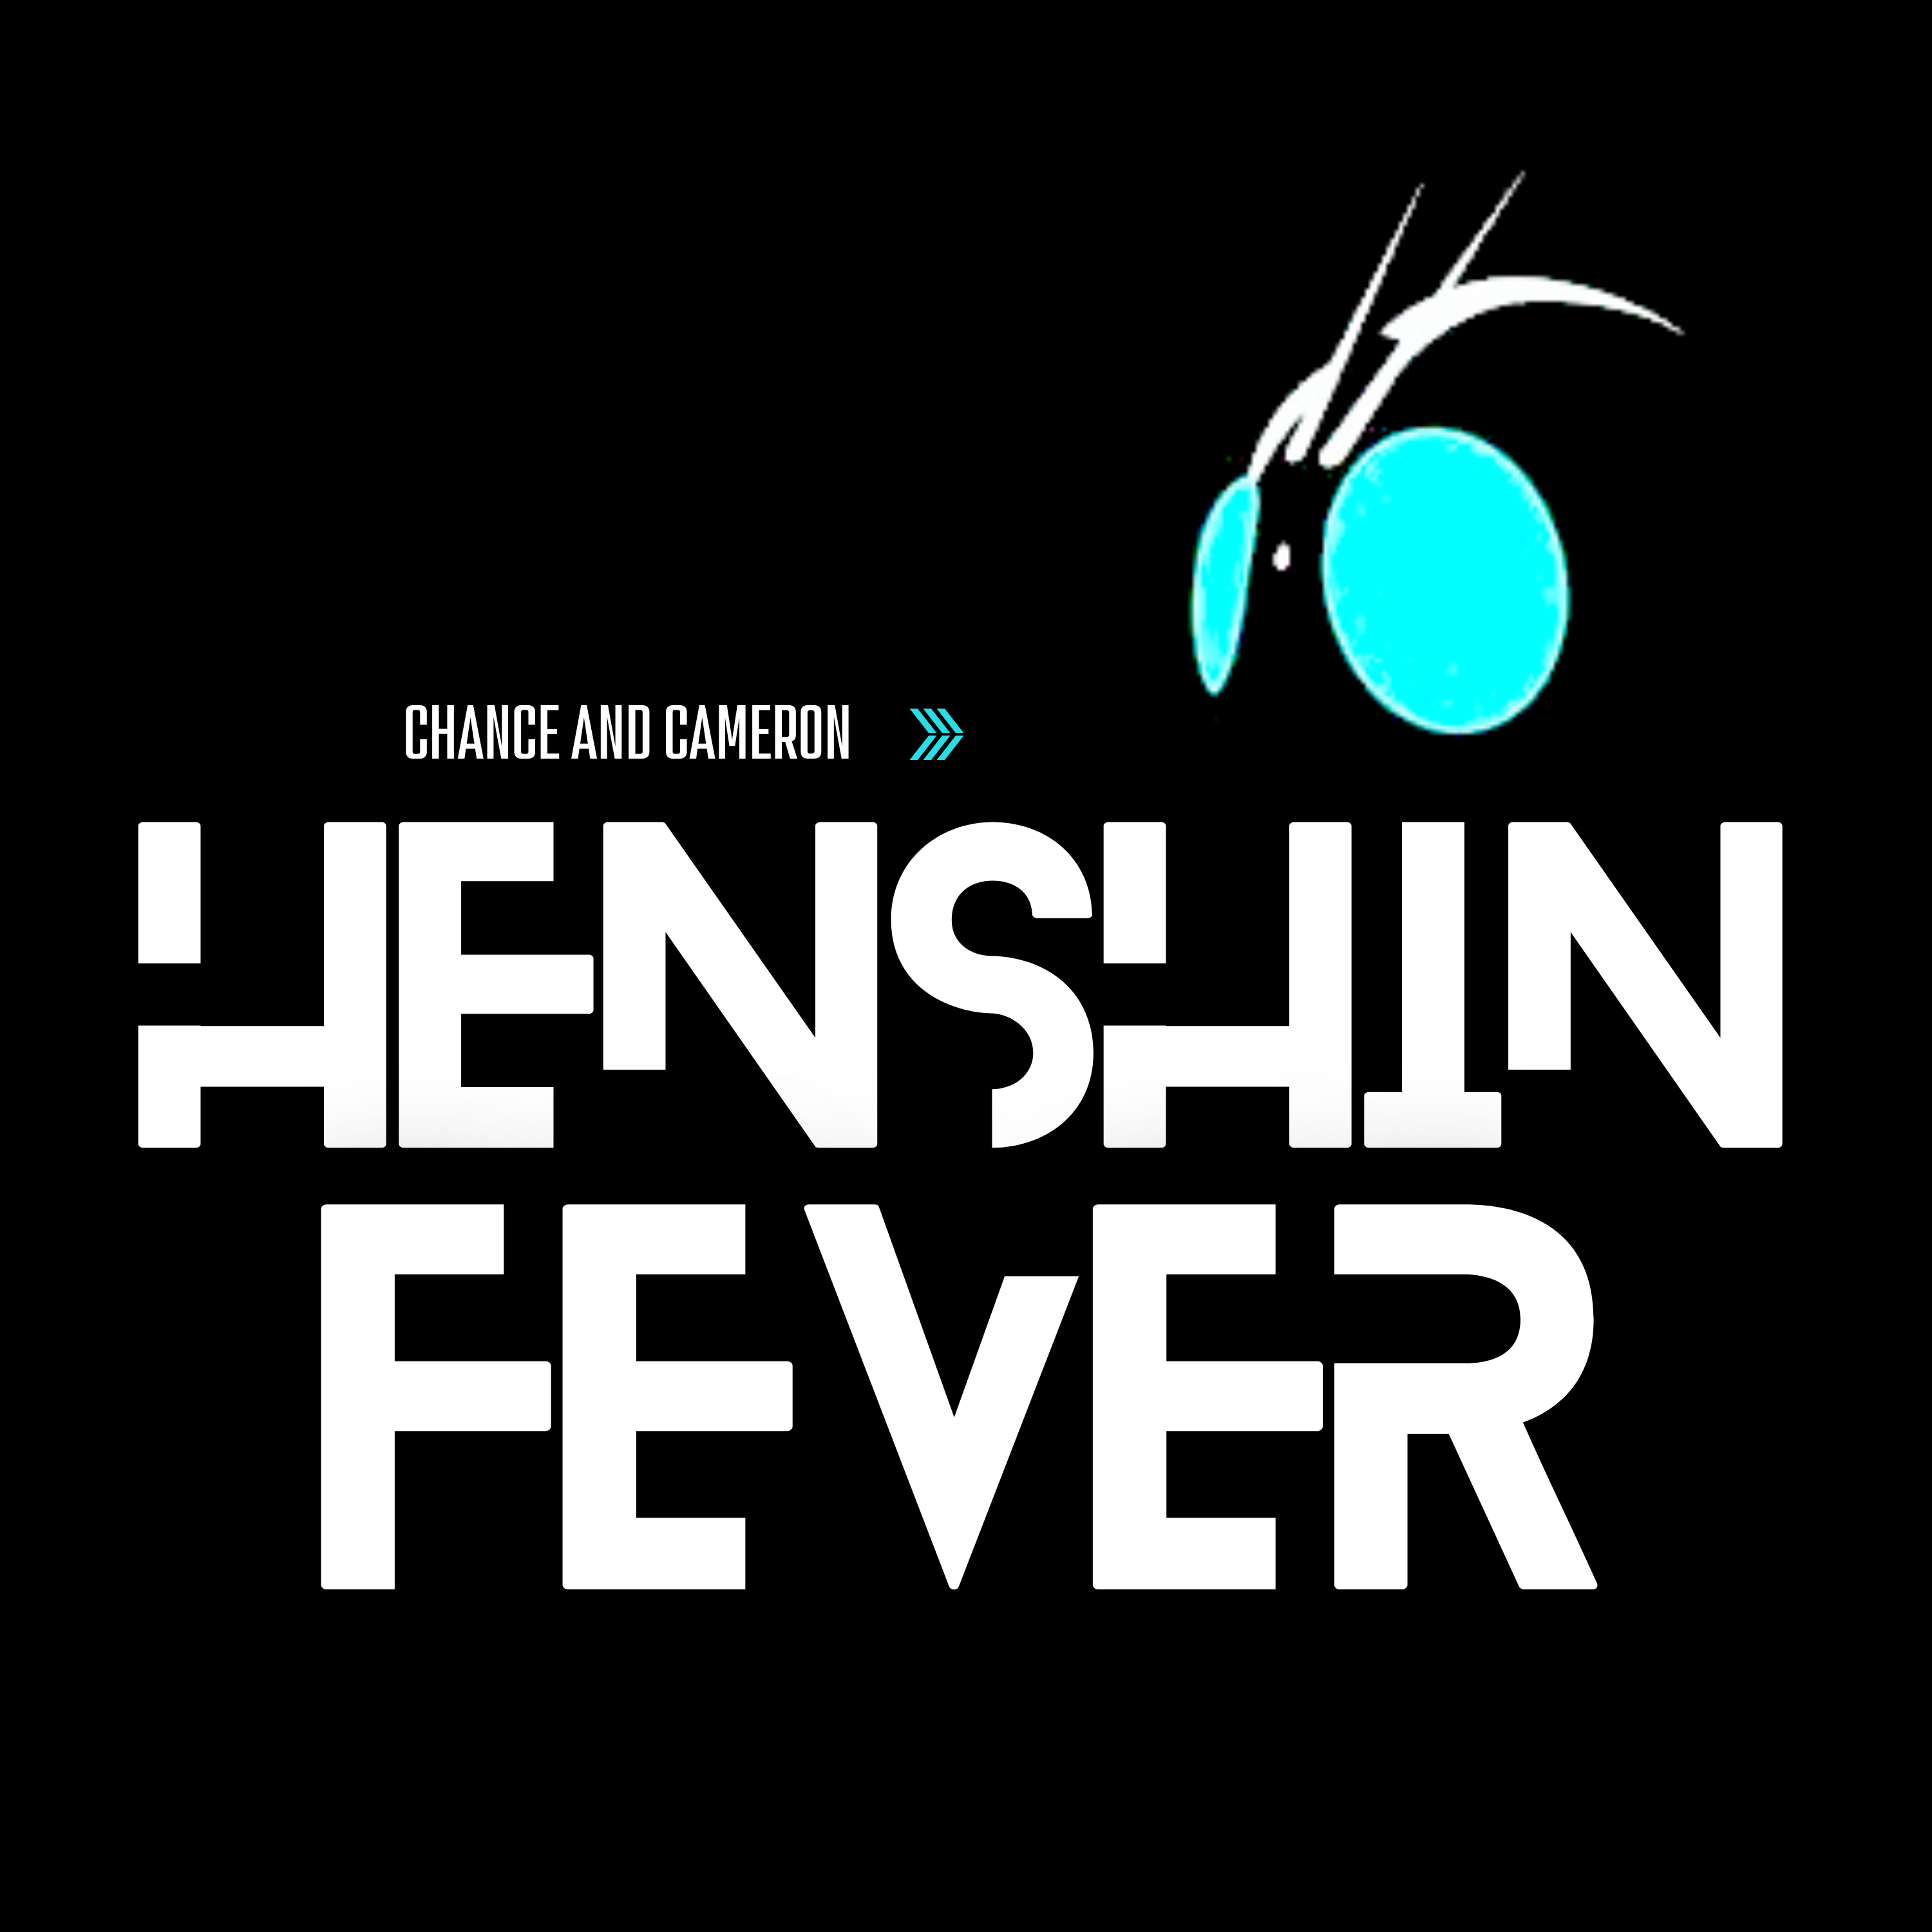 Gotchard Episodes 9 & 10 - Henshin Fever